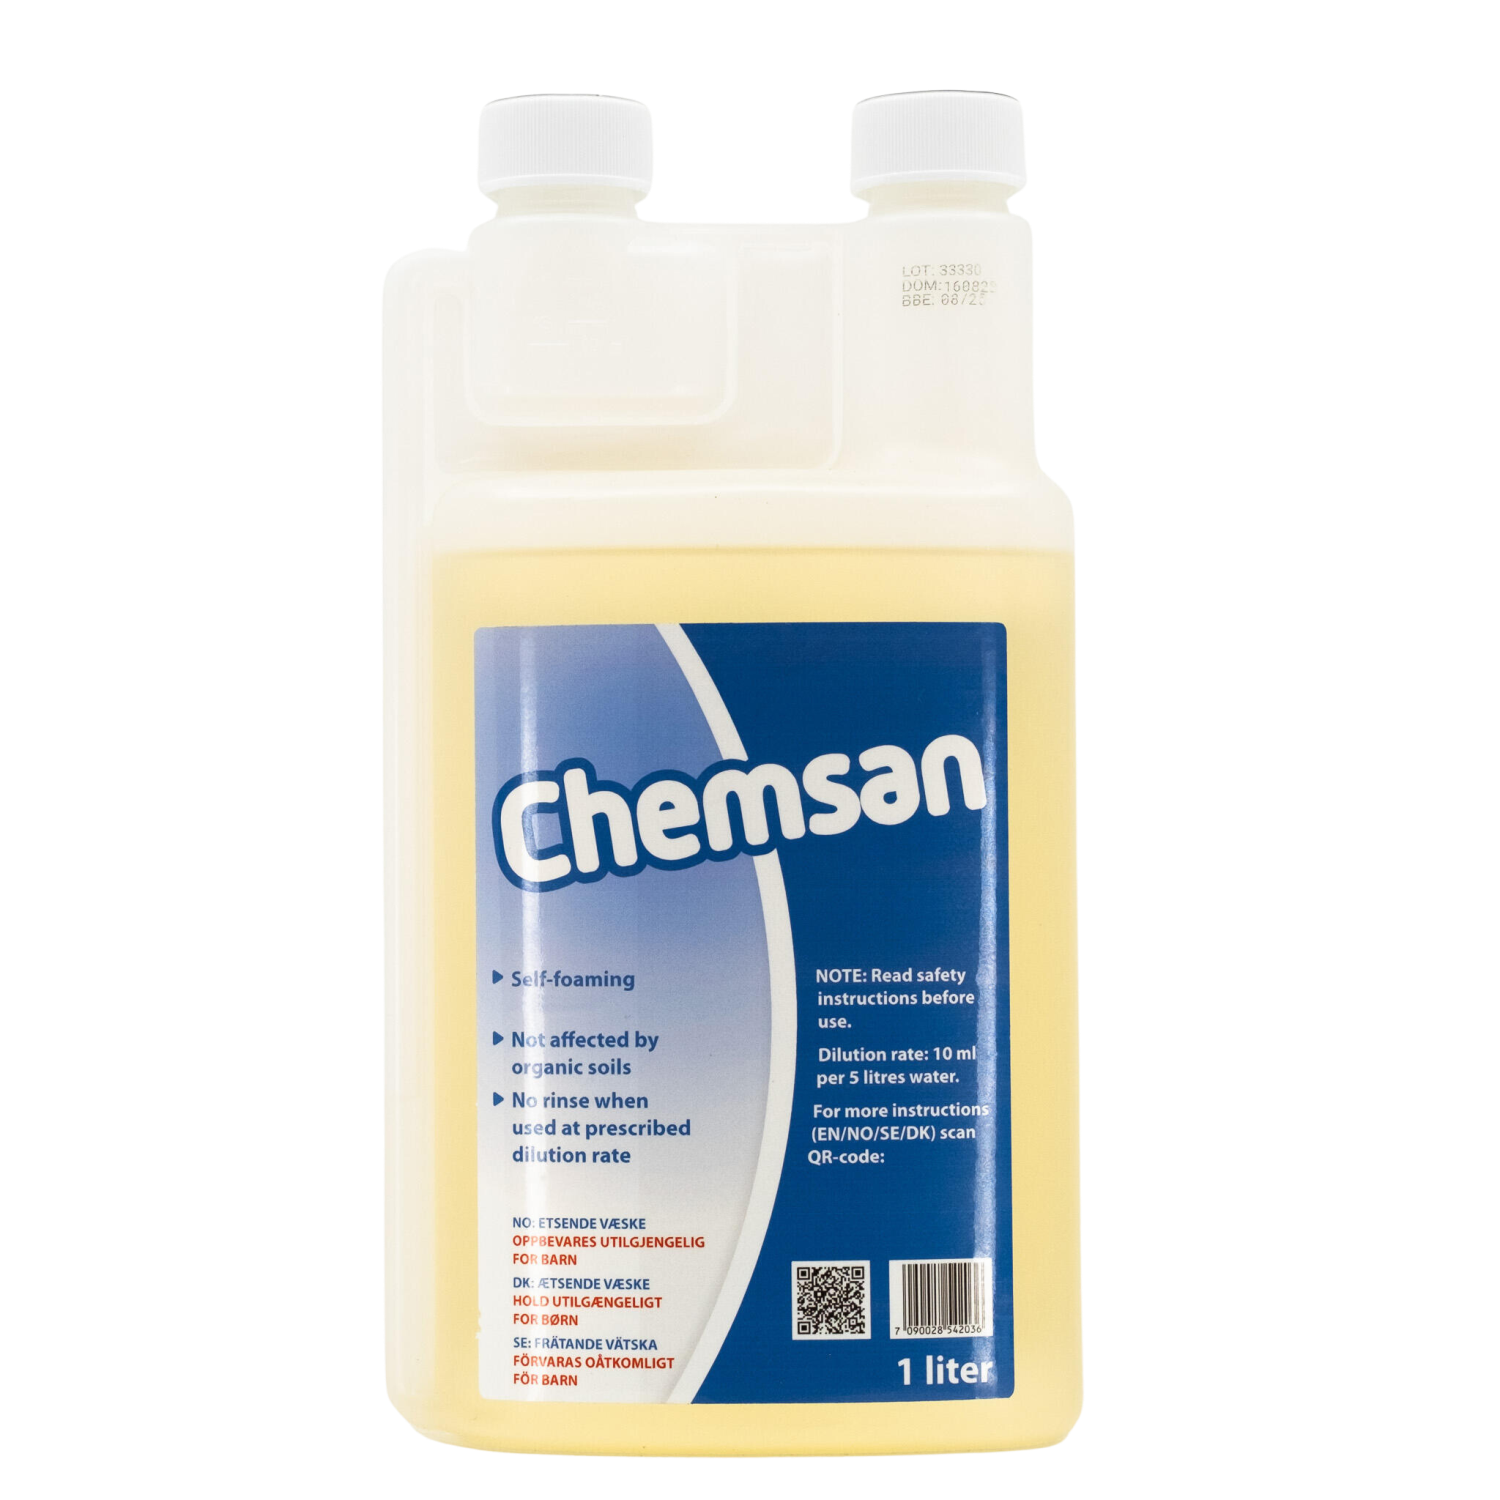 Chemsan 1 liter